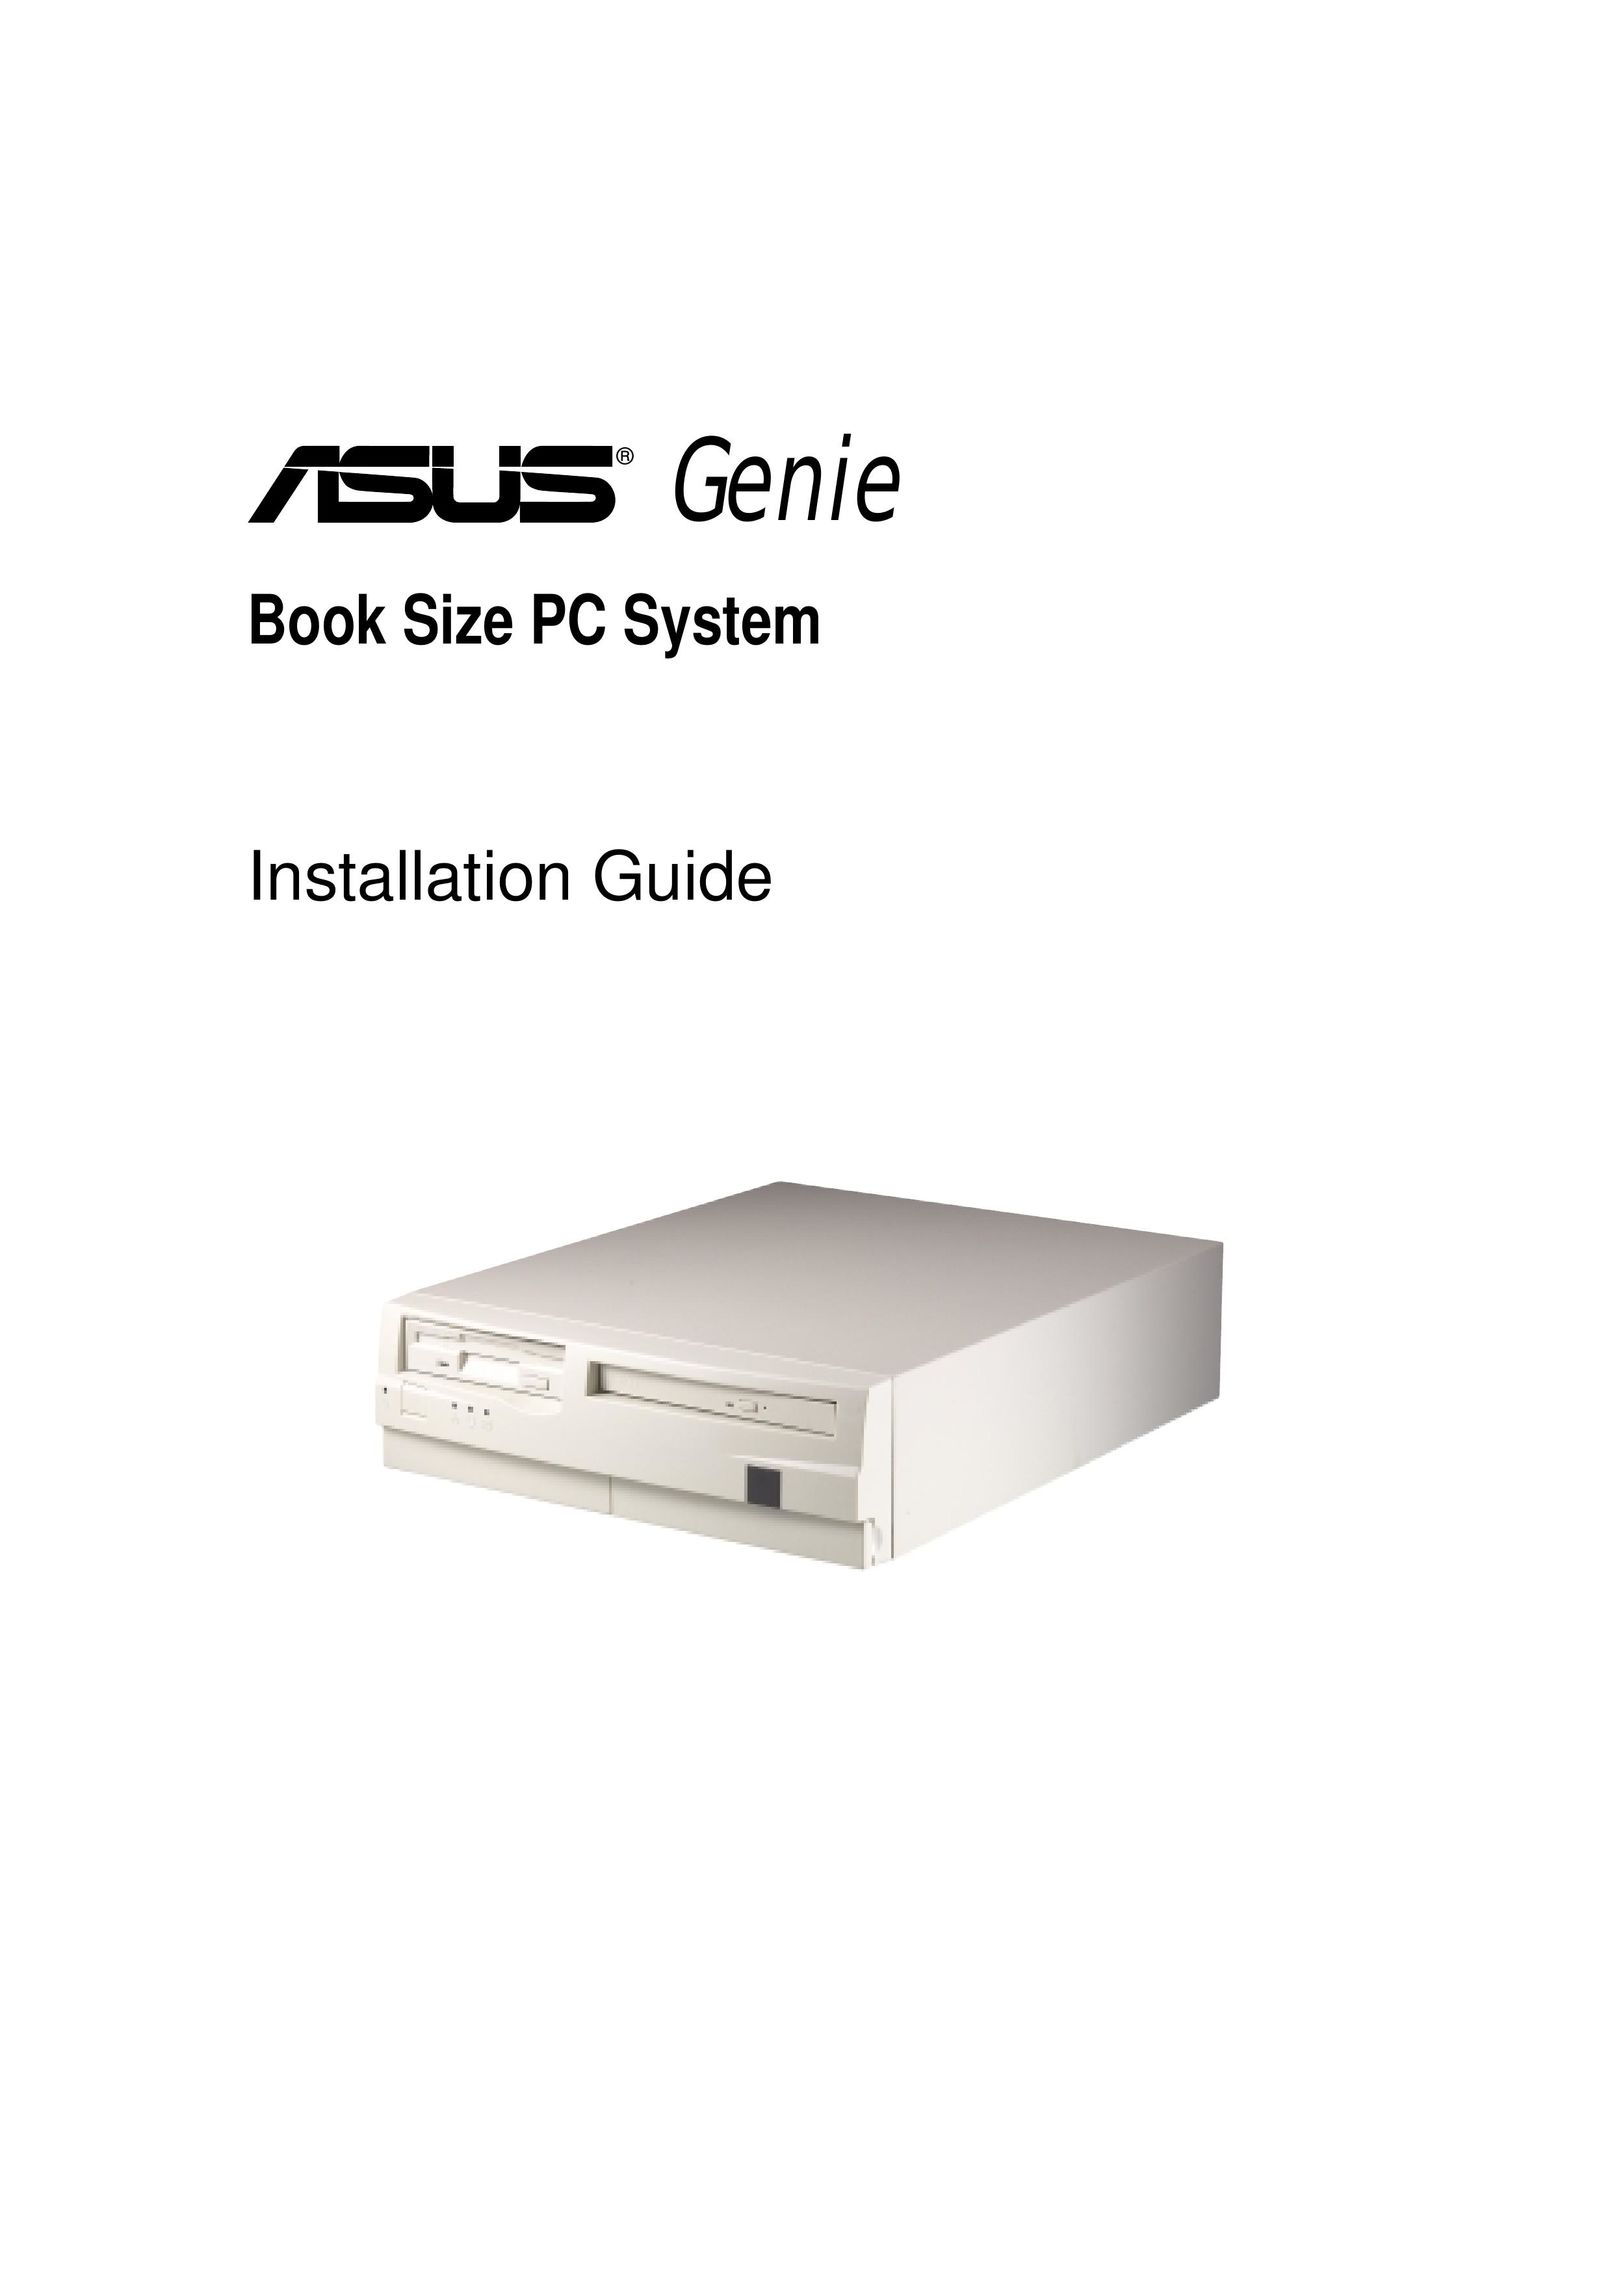 Asus Genie Network Card User Manual